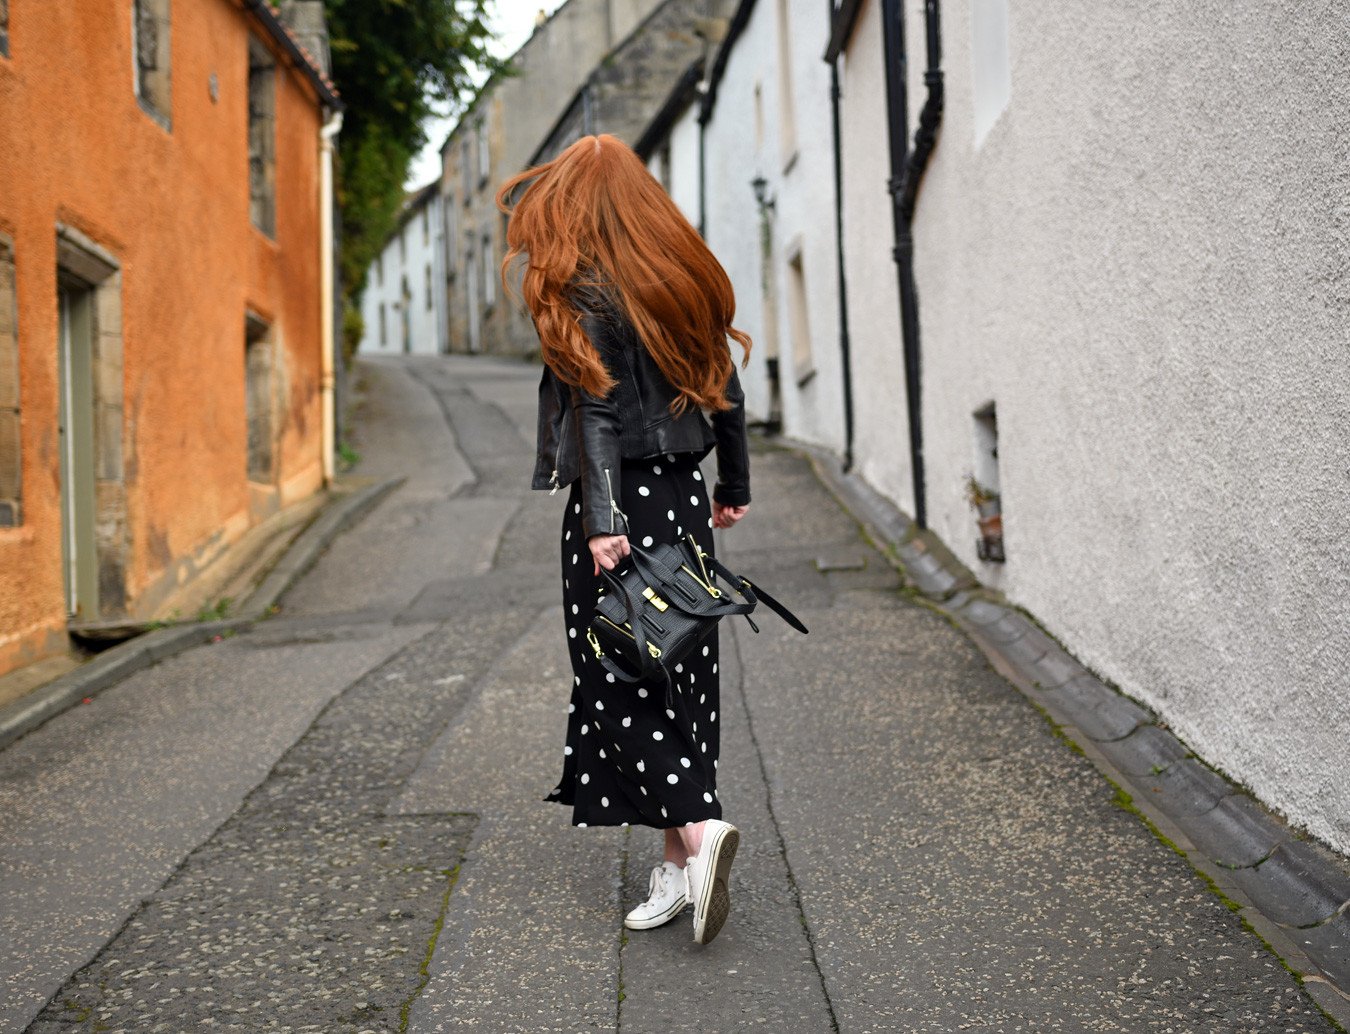 red hair and polka dot skirt